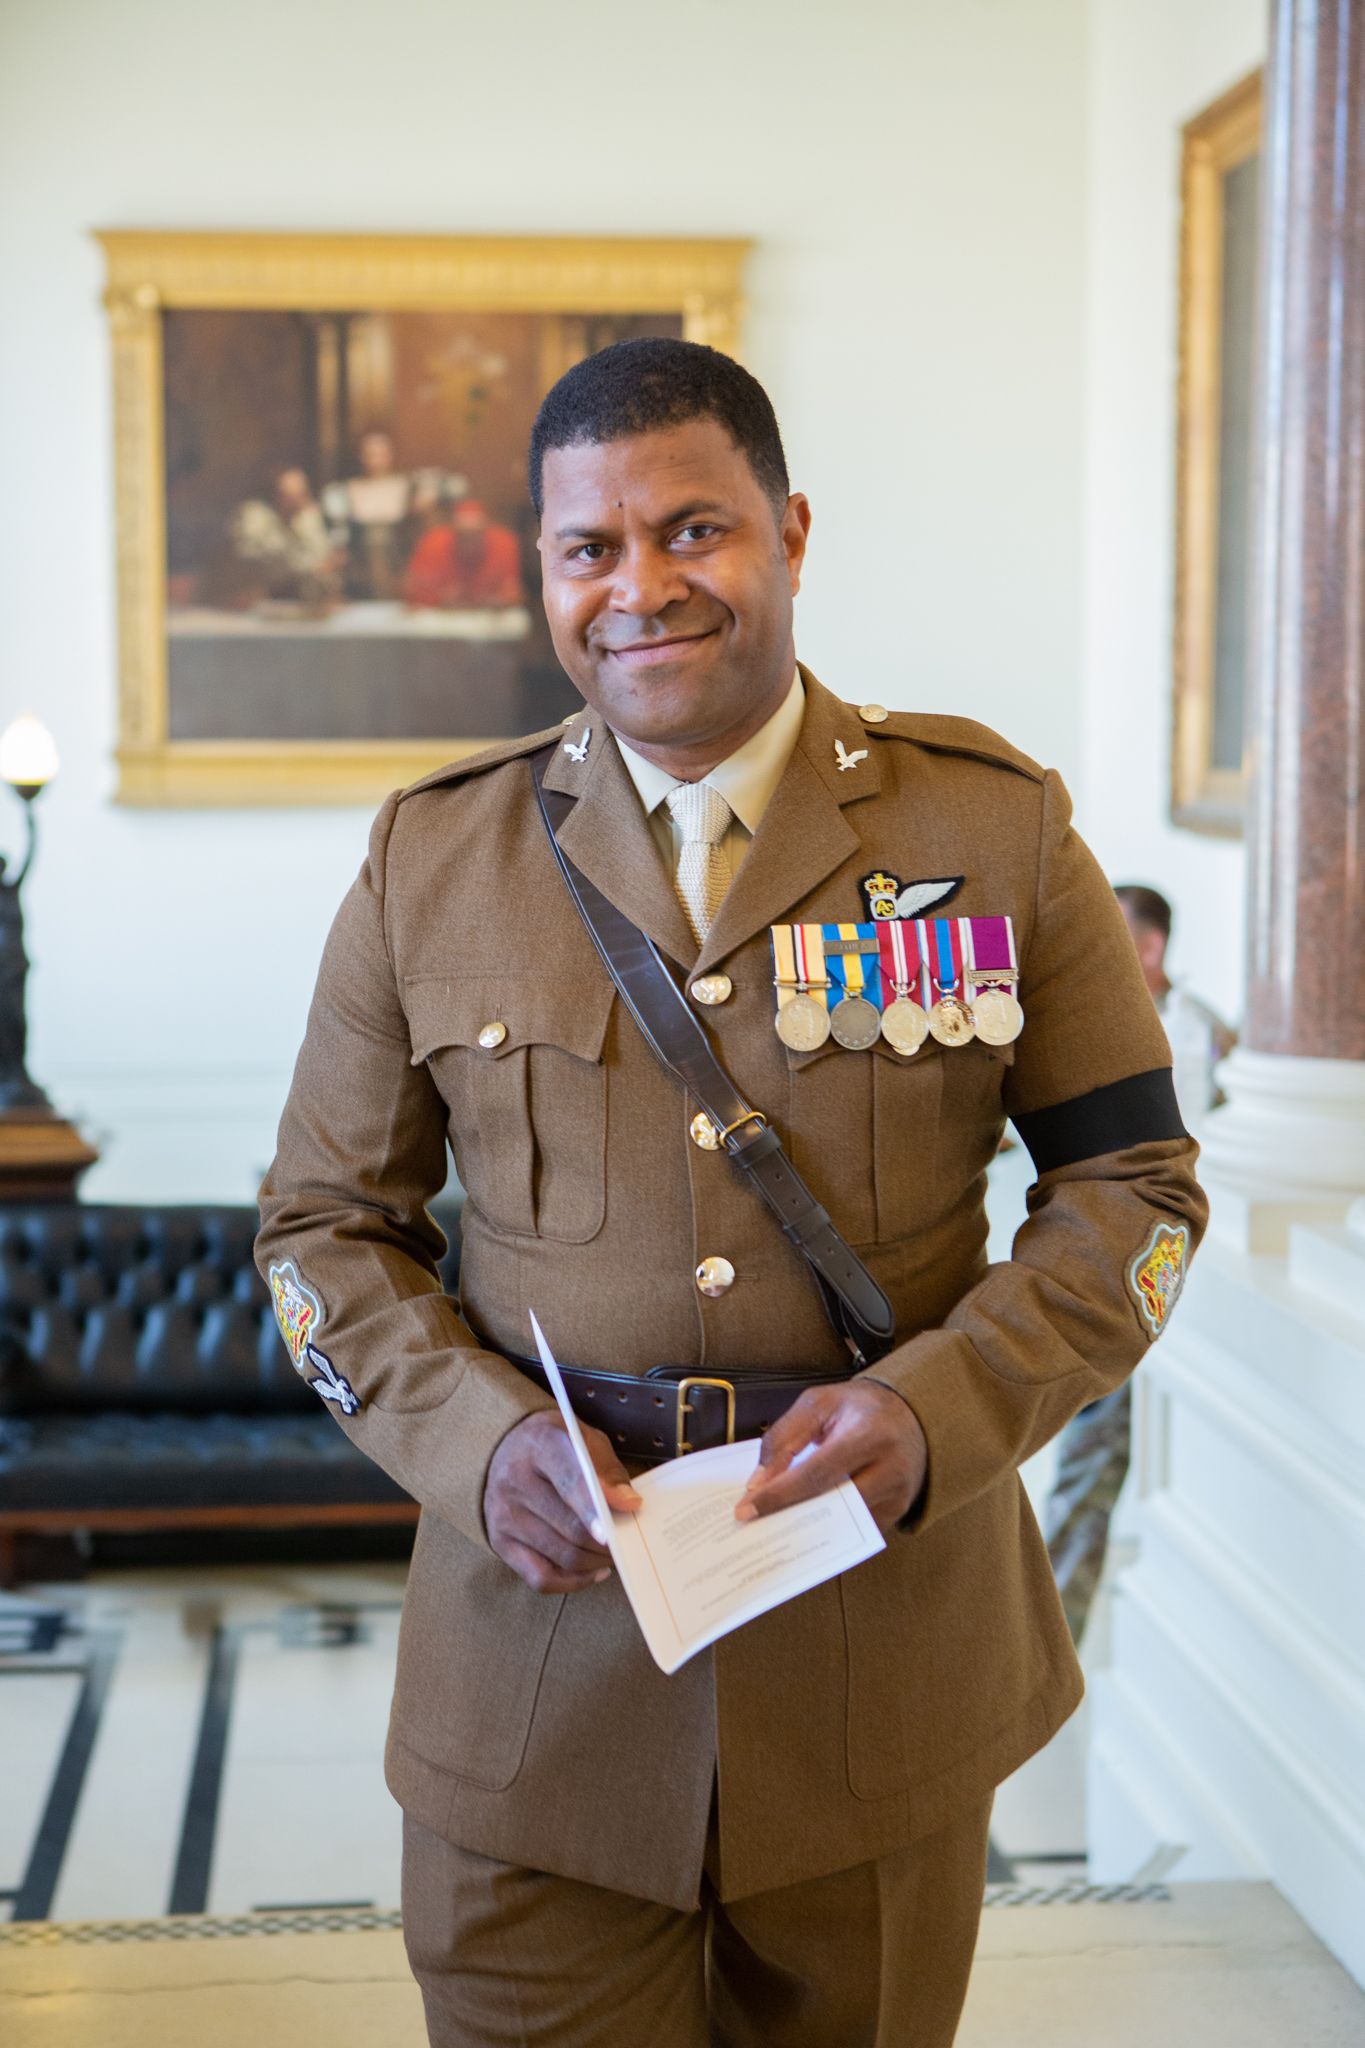 Person in military uniform